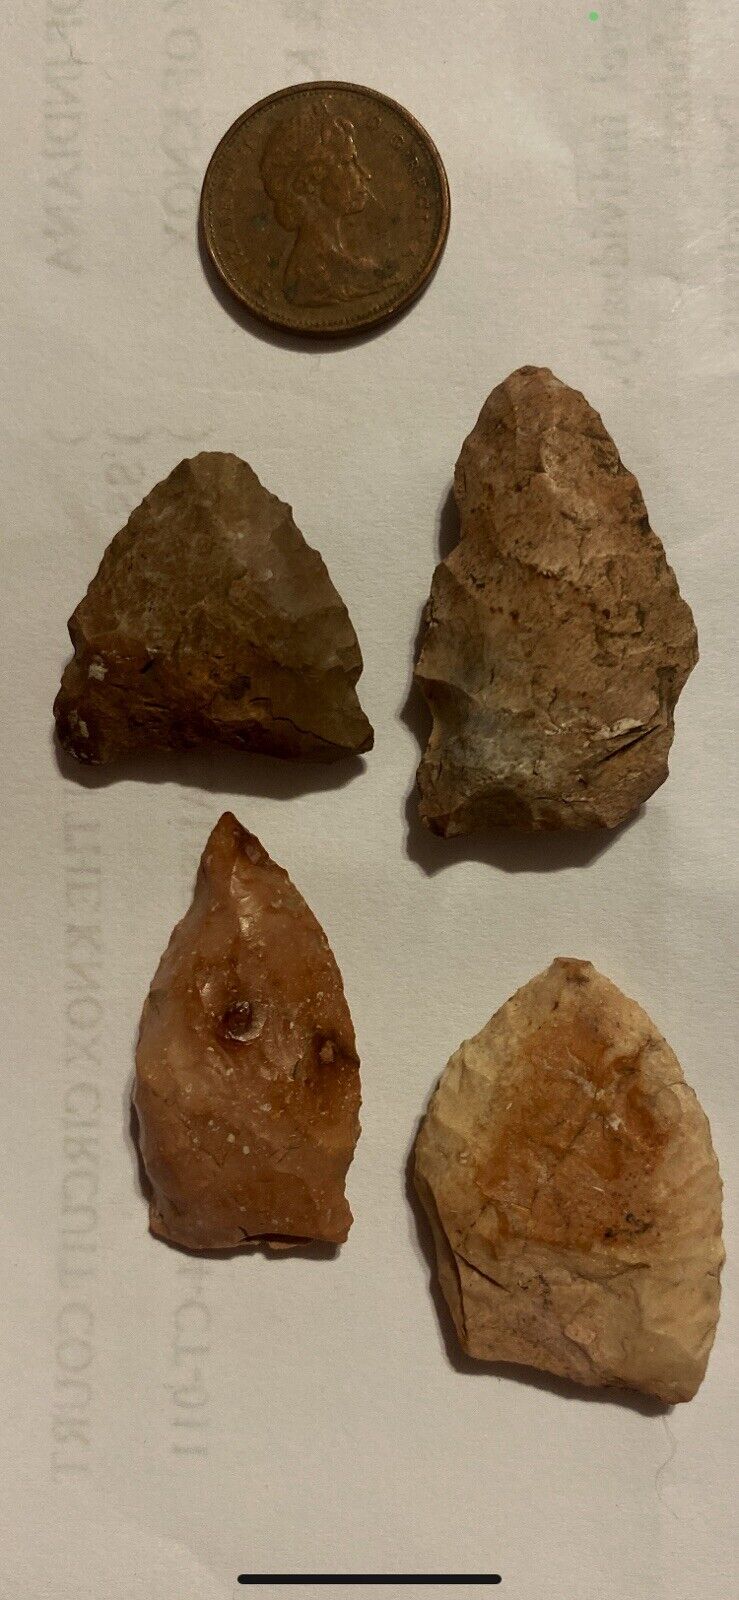 NR-4 pc Arrowhead native American Indian artifact pre-1600 stone point flint